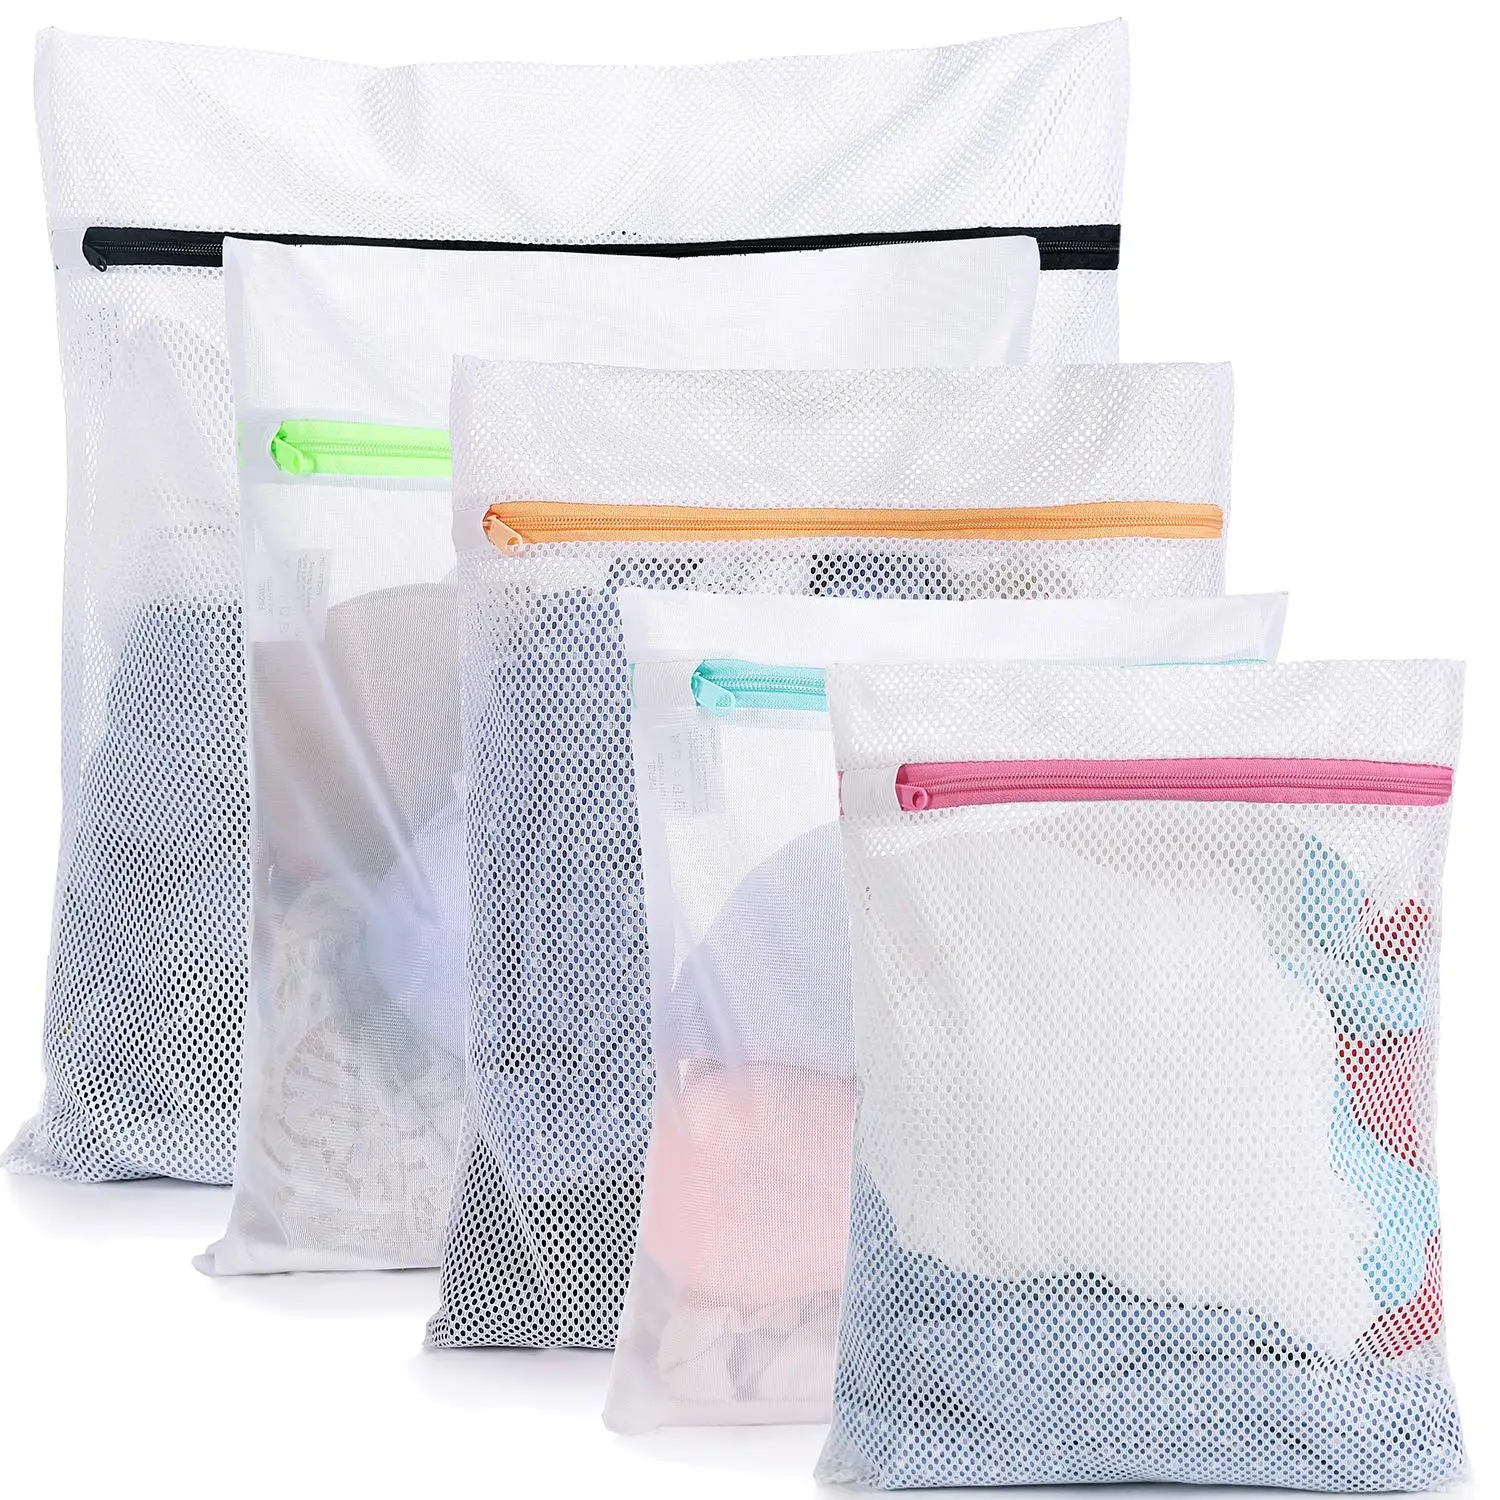 Colorful Zipper Mesh Laundry Bags,Travel Storage Organize Bag,Clothing ...